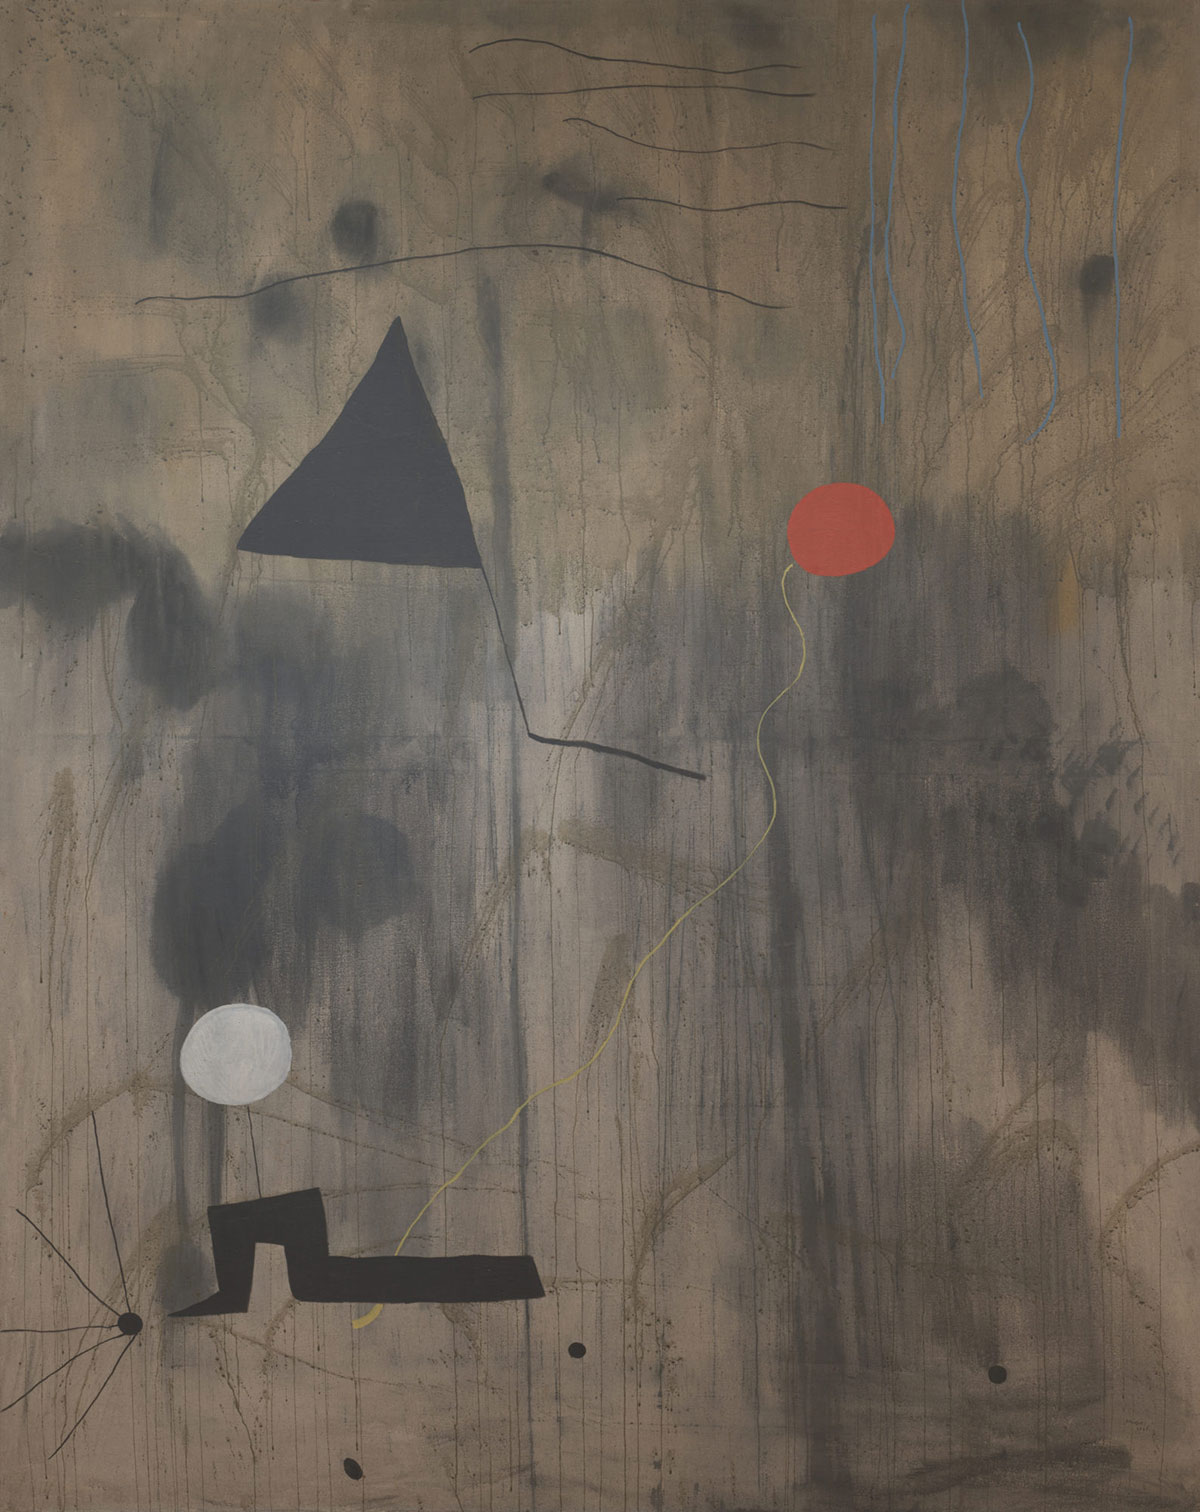 Joan Miró 'Birth of the World' (1925). Courtesy John Wronn / MoMA.